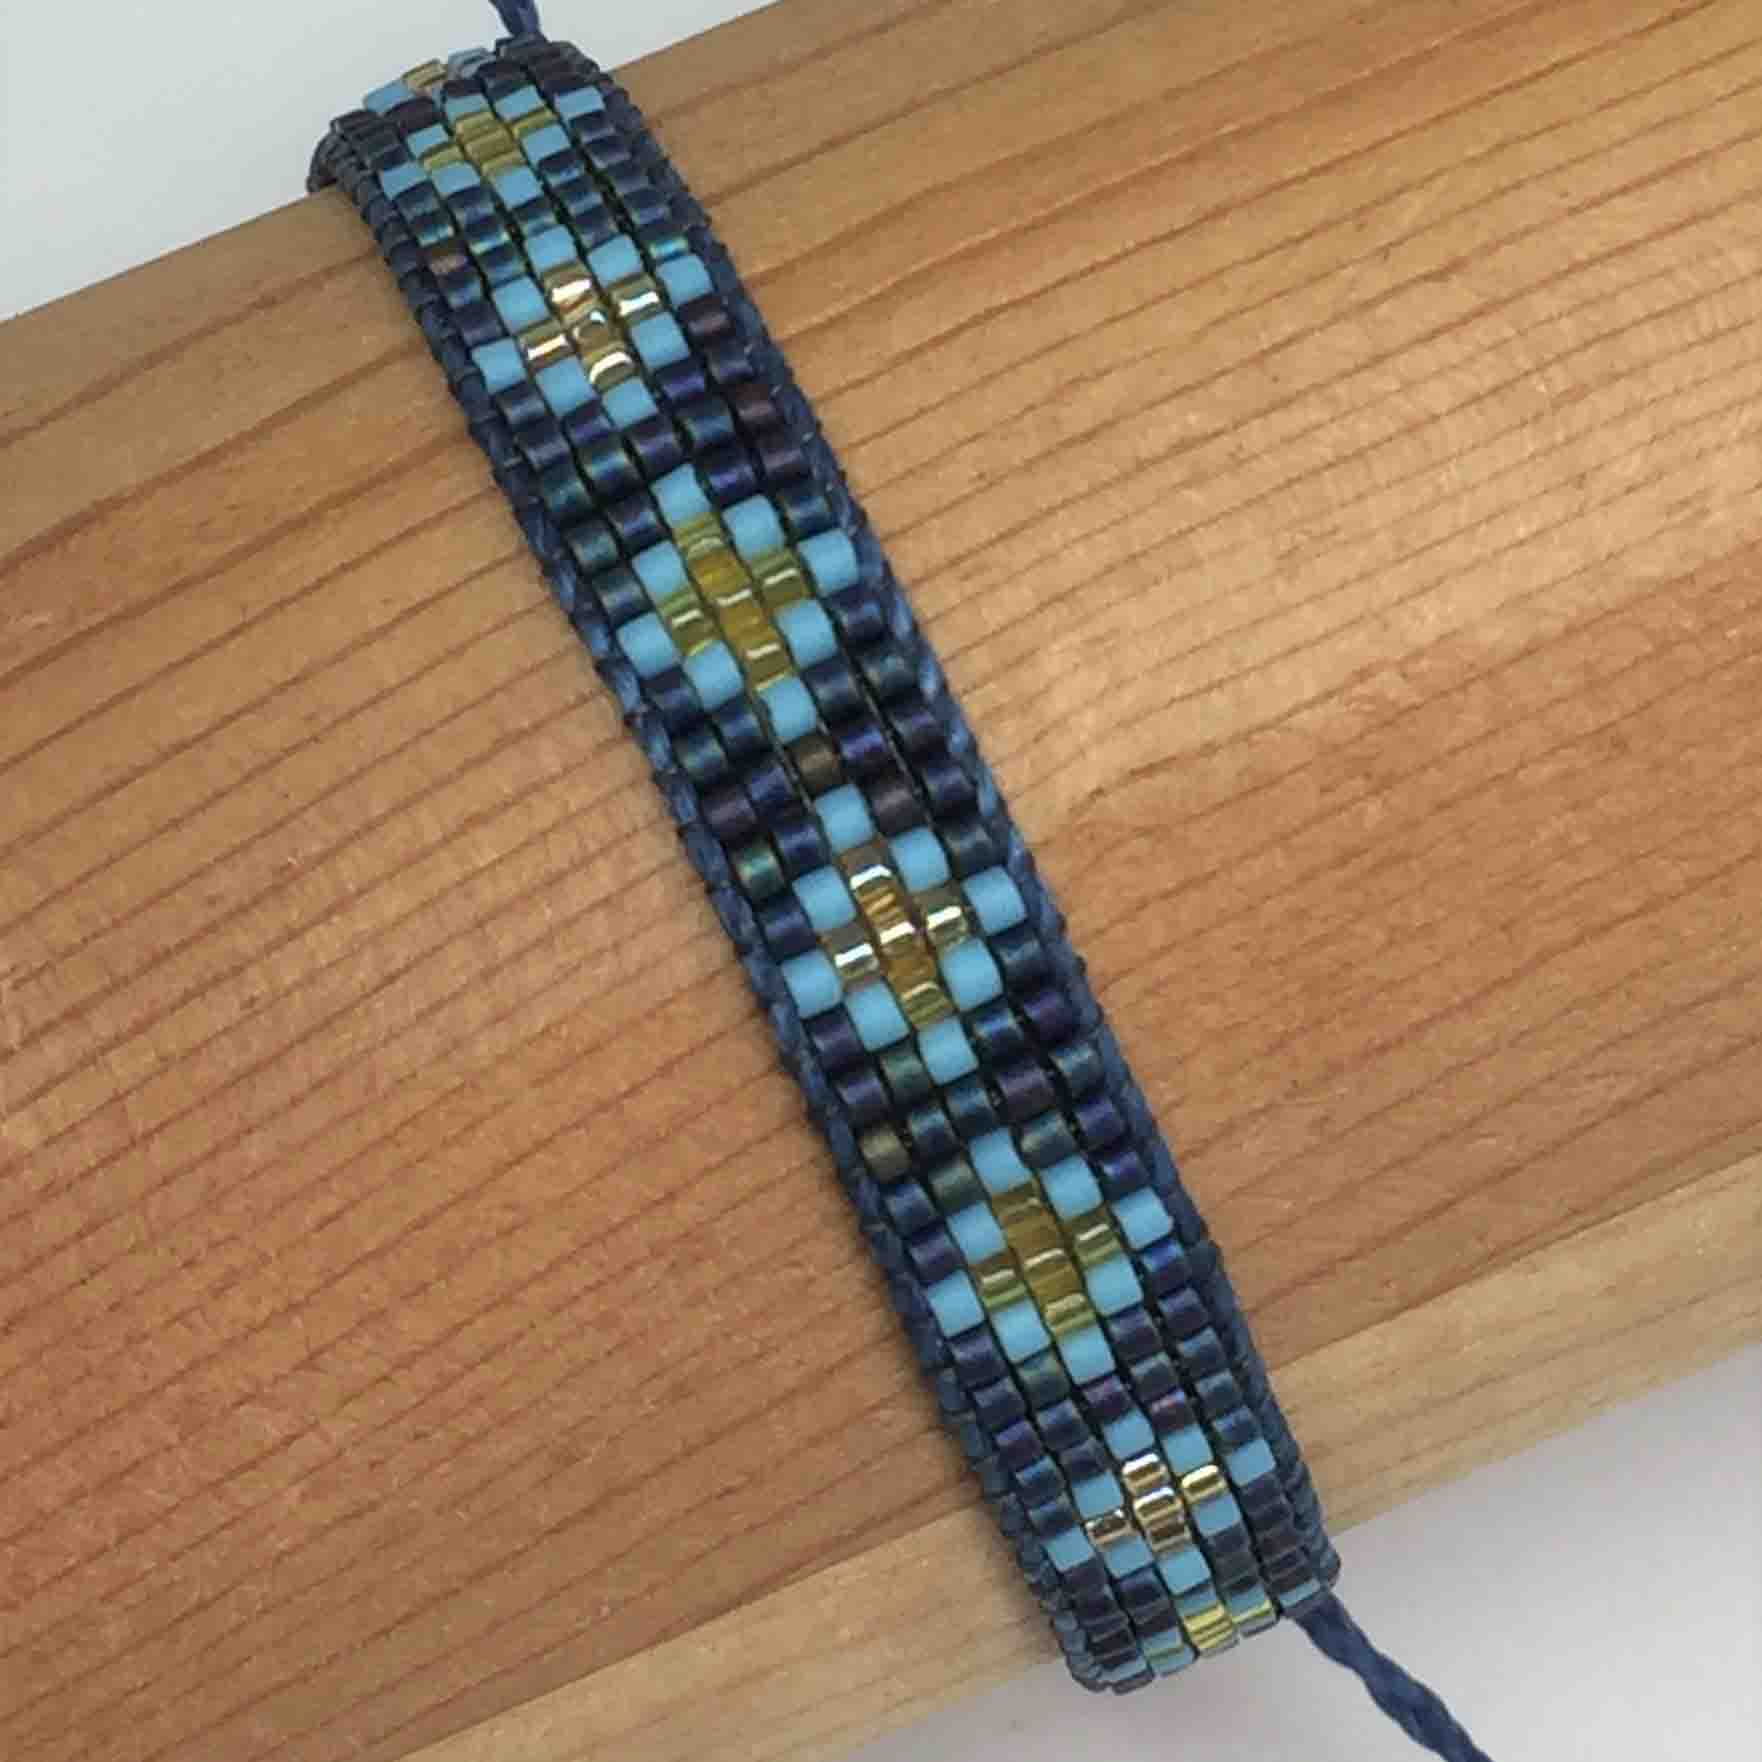 Bracelet woven with loom